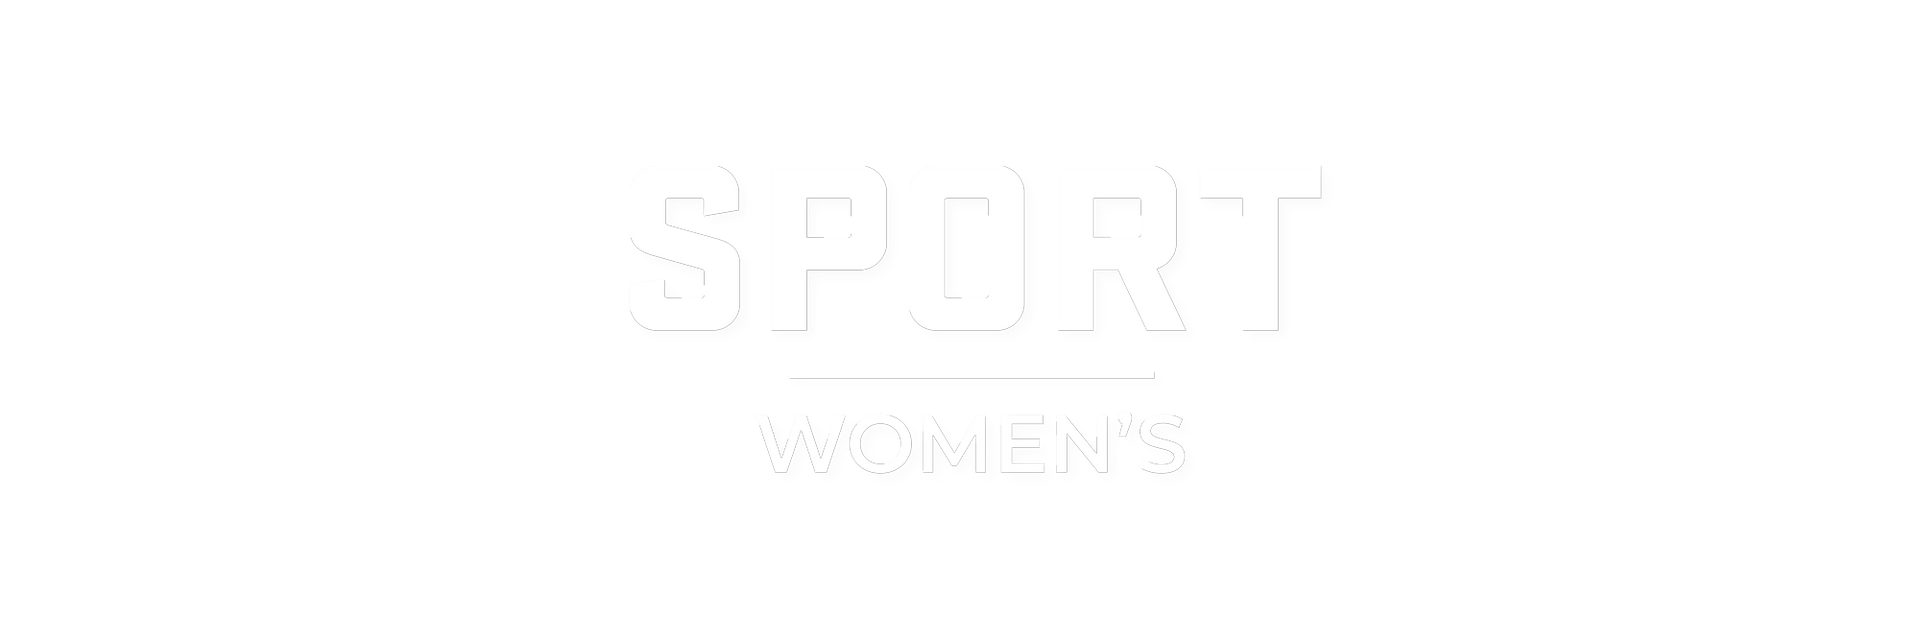 Women's Sport  Header Image Text Overlay